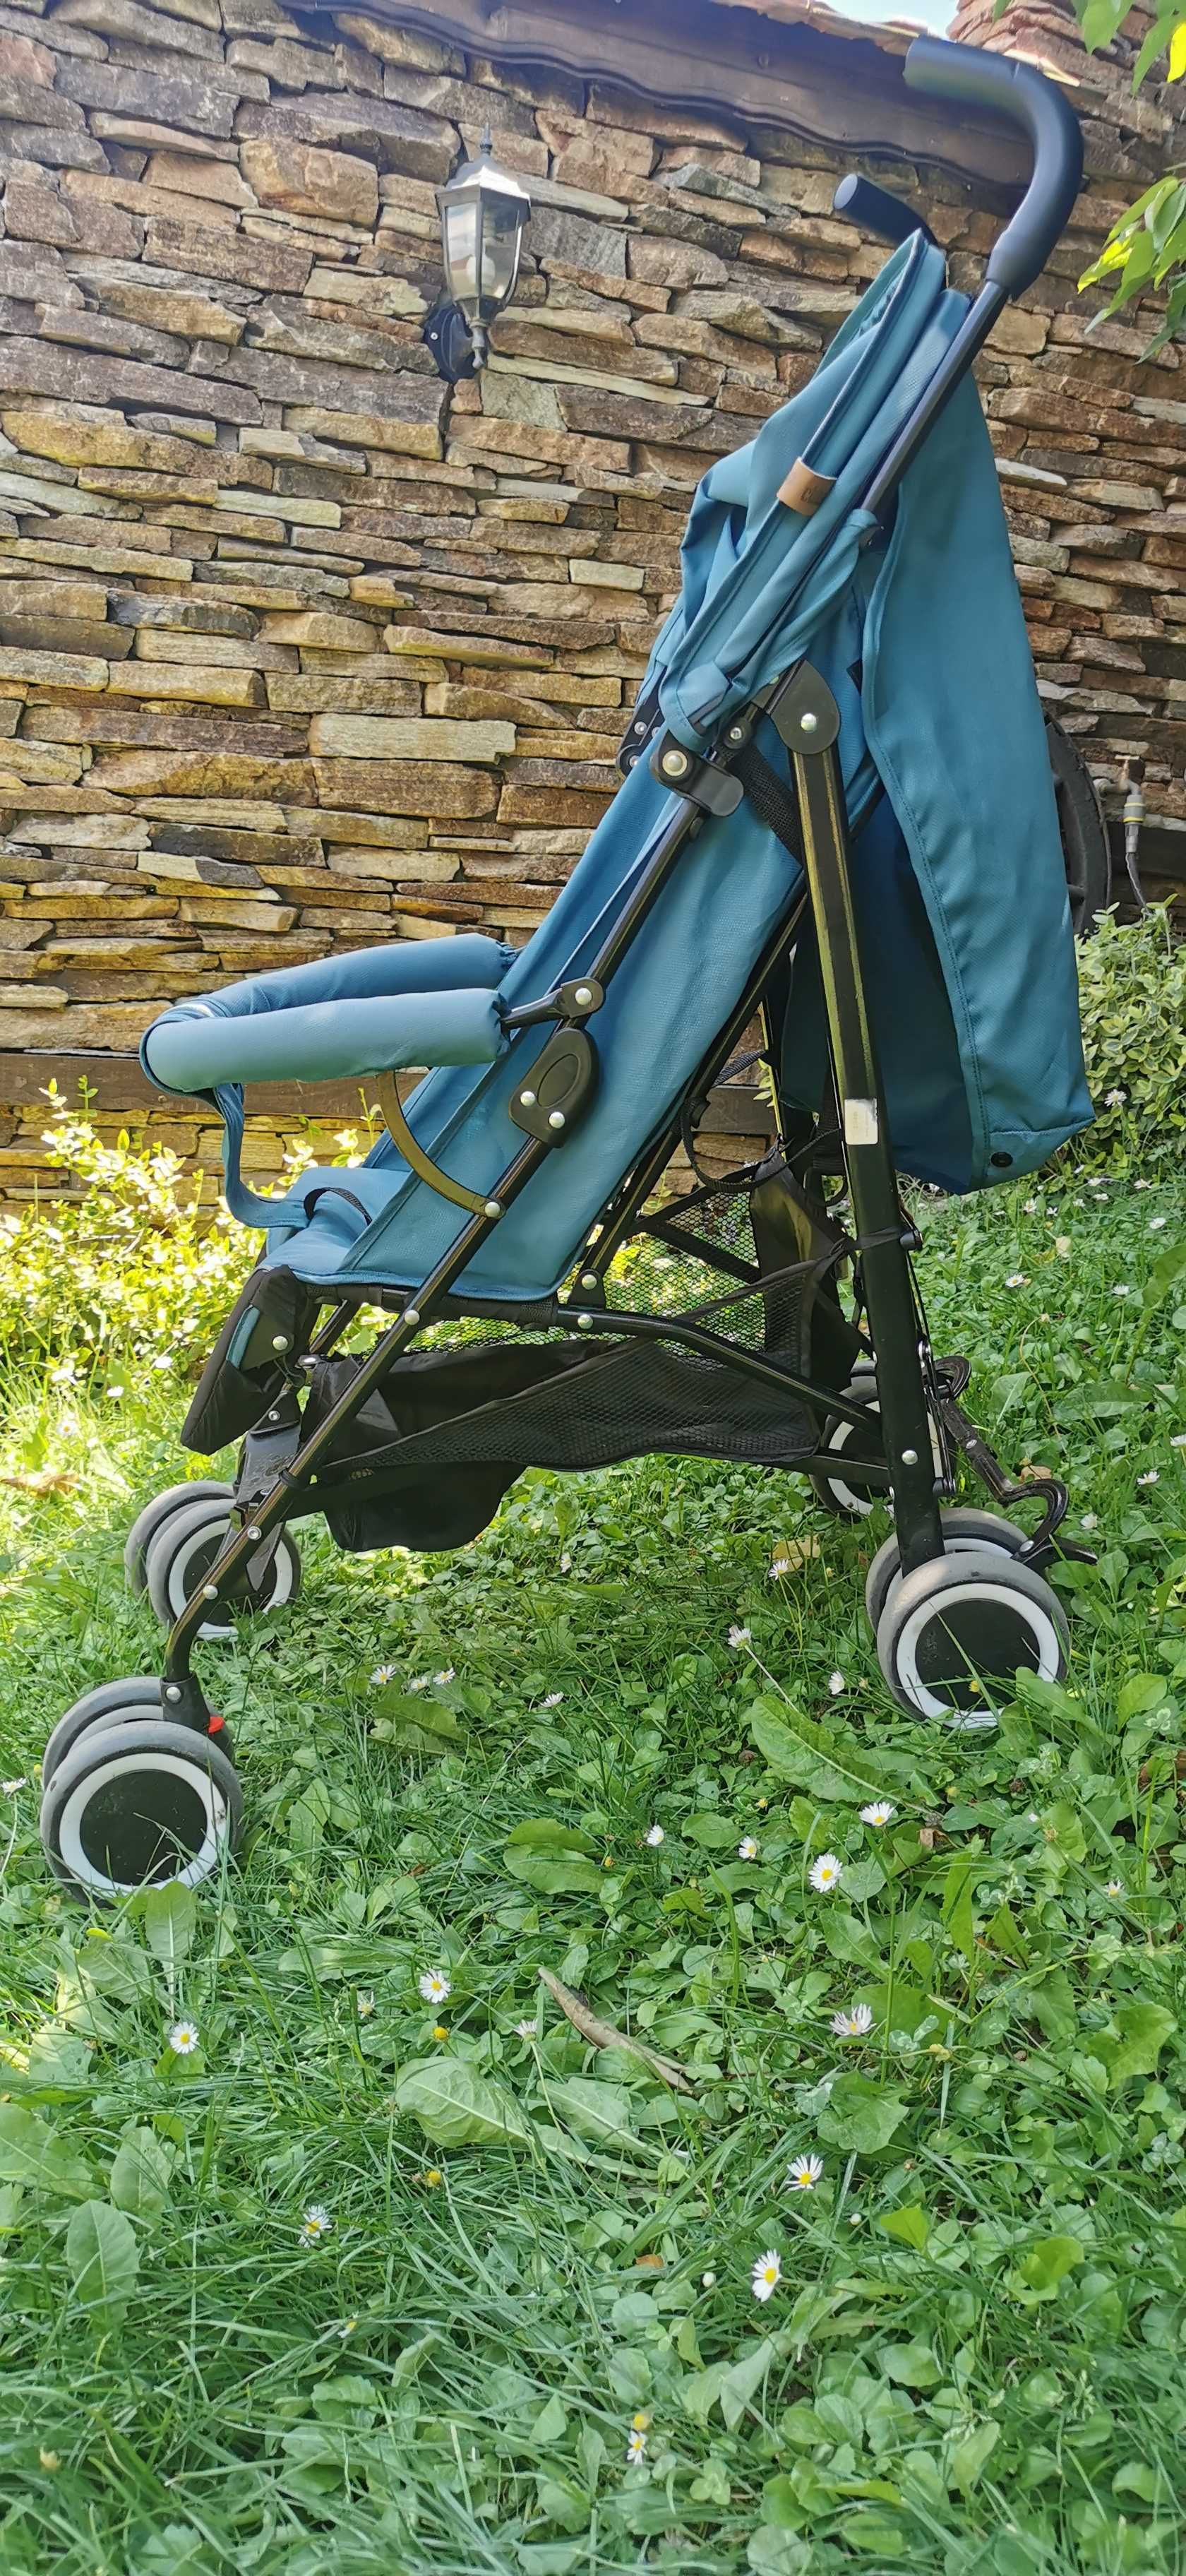 Лятна детска количка Chipolino